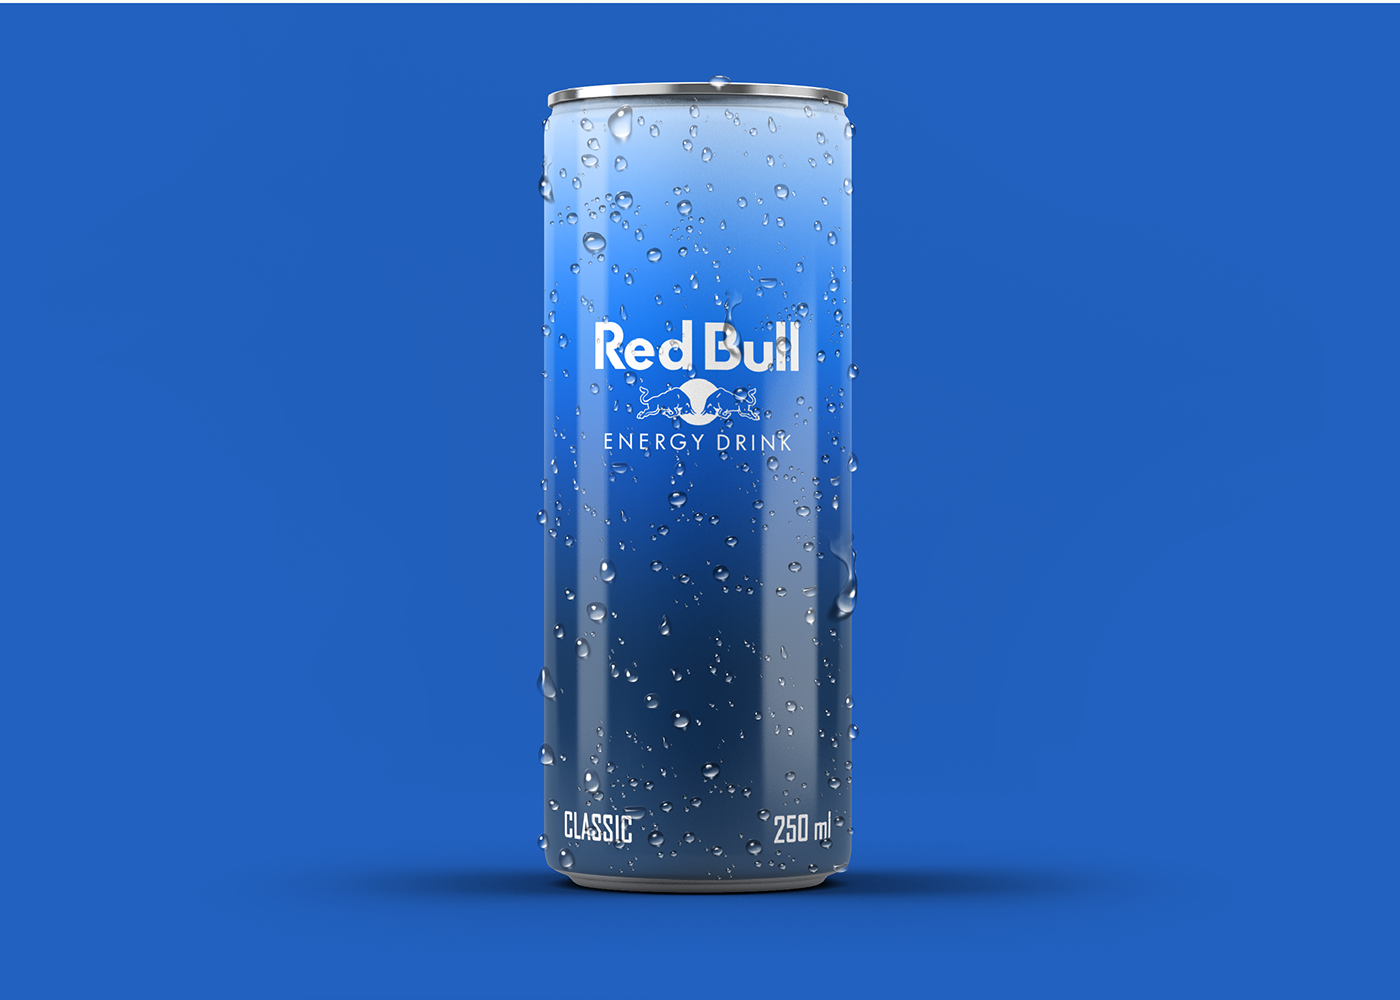 redesign RedBull embalagem new minimalismo Red Bull drink energy drink packing